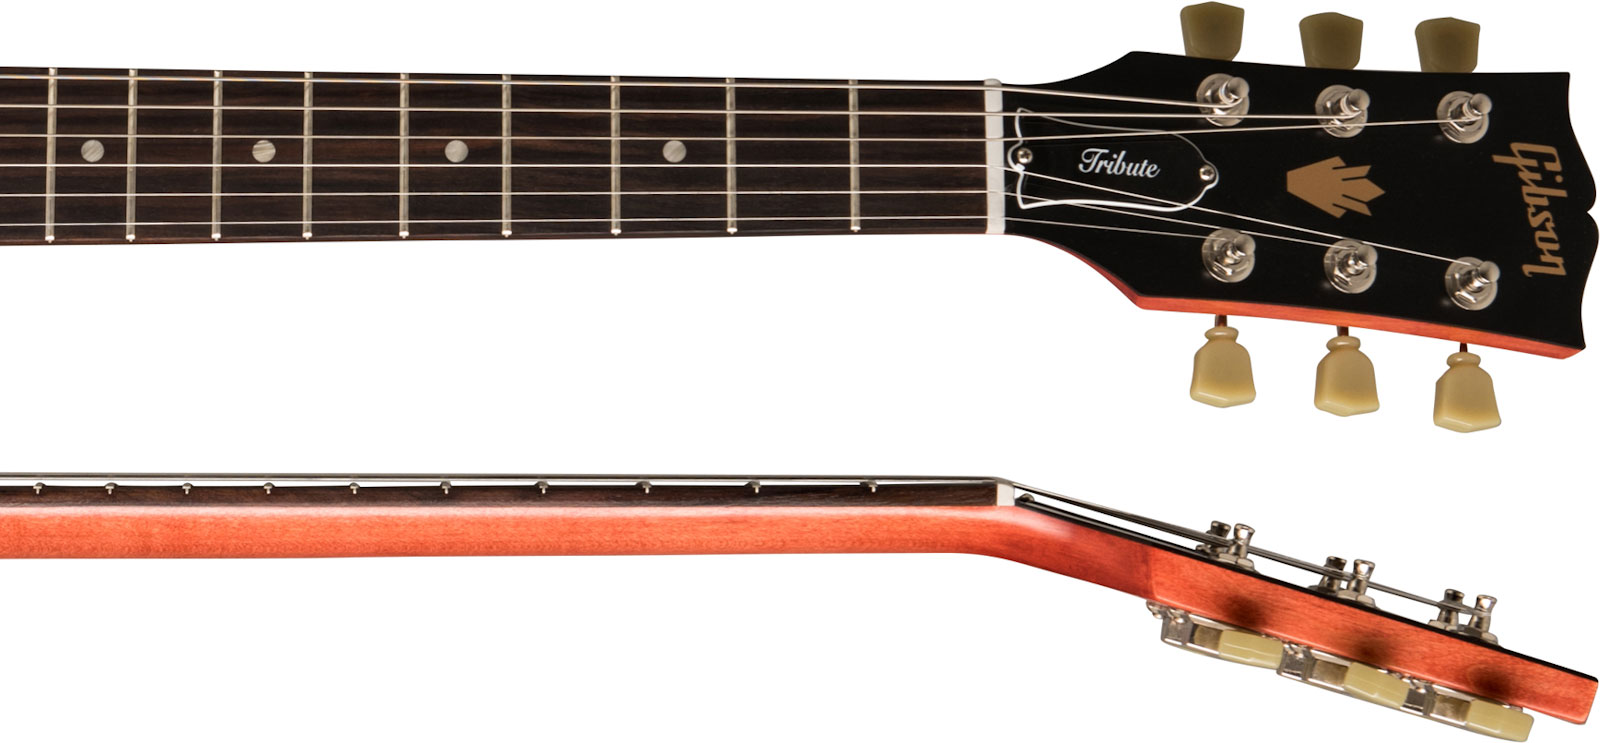 Gibson Sg Tribute Modern 2h Ht Rw - Vintage Cherry Satin - Retro rock electric guitar - Variation 3